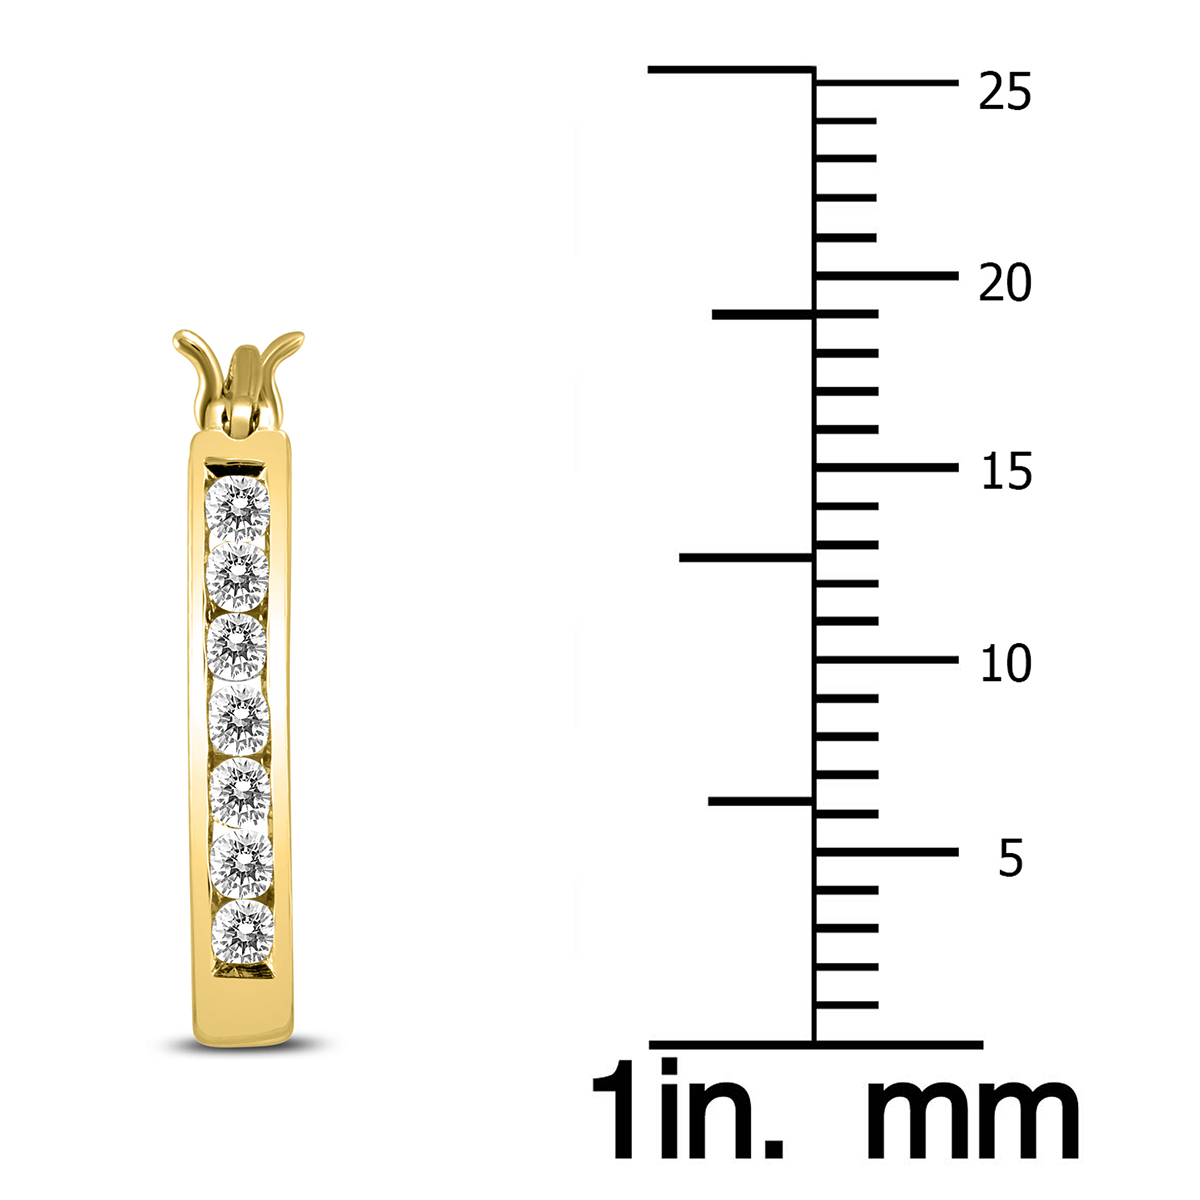 szul.com 1/2 Carat TW Diamond Hoop Earrings in 10k Yellow Gold